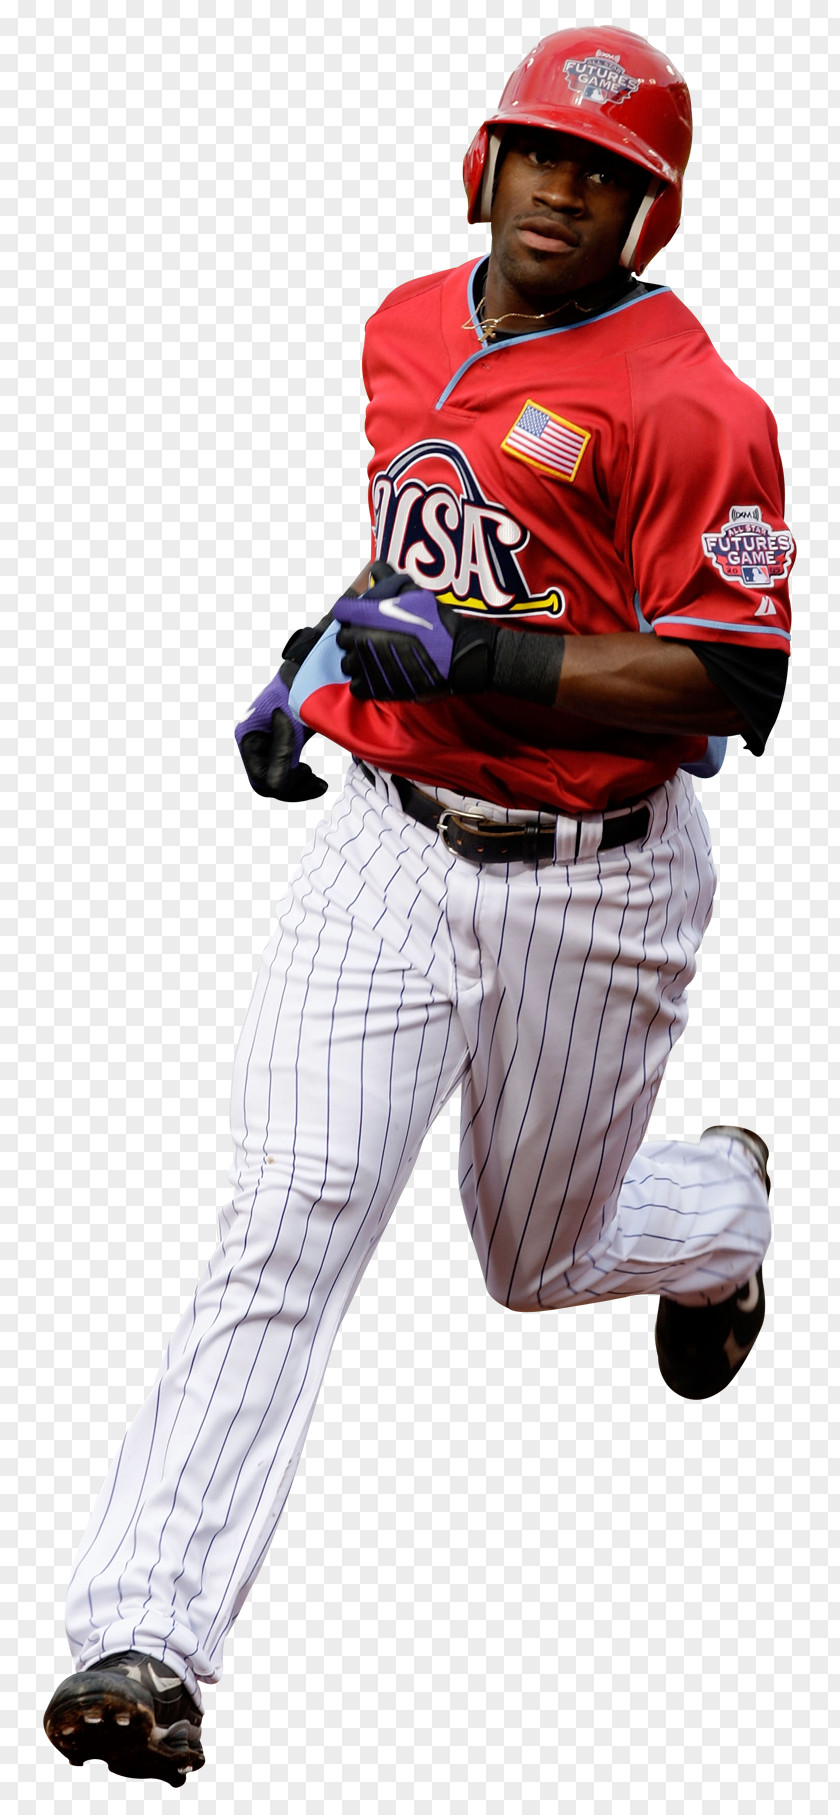 Baseball Pitcher Glove Uniform Positions PNG